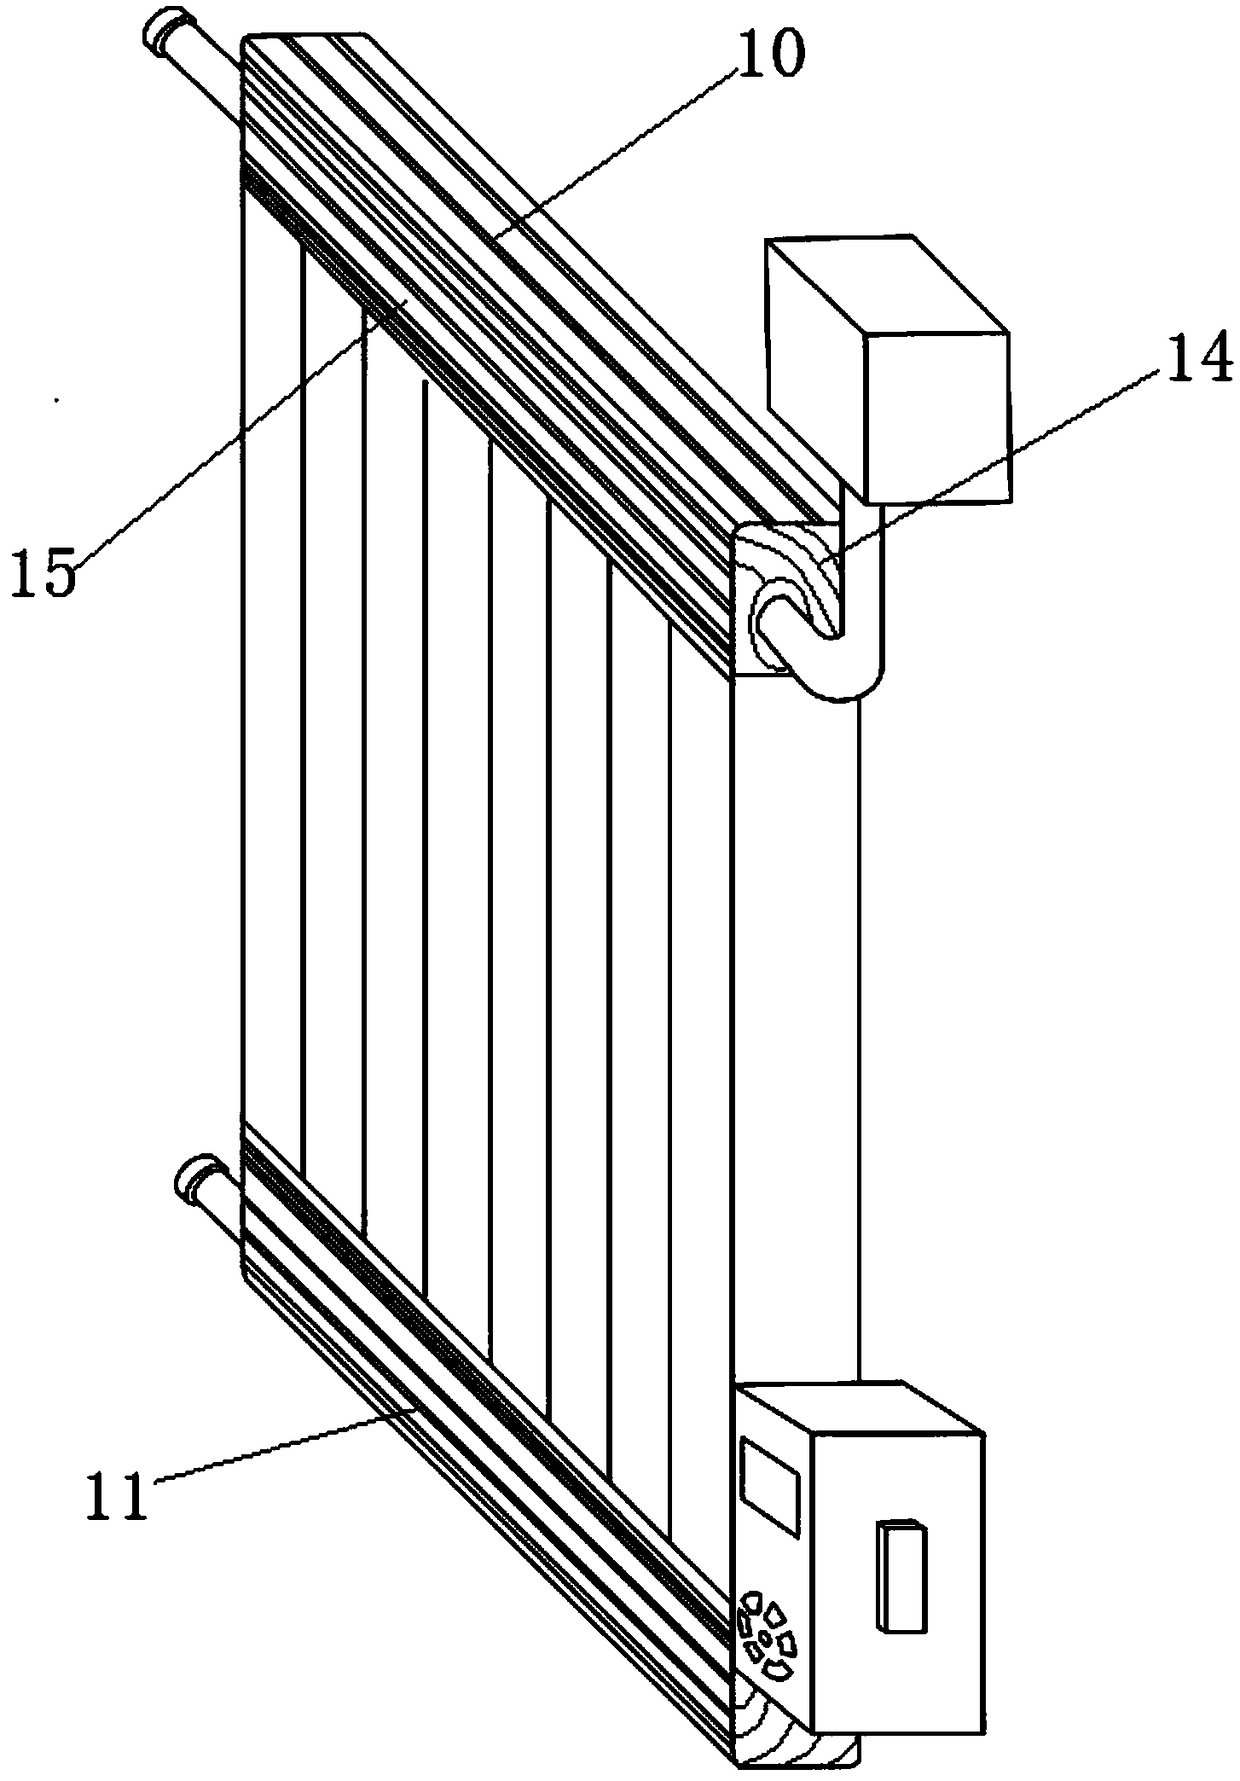 Double-pipe steel aluminum heating radiator